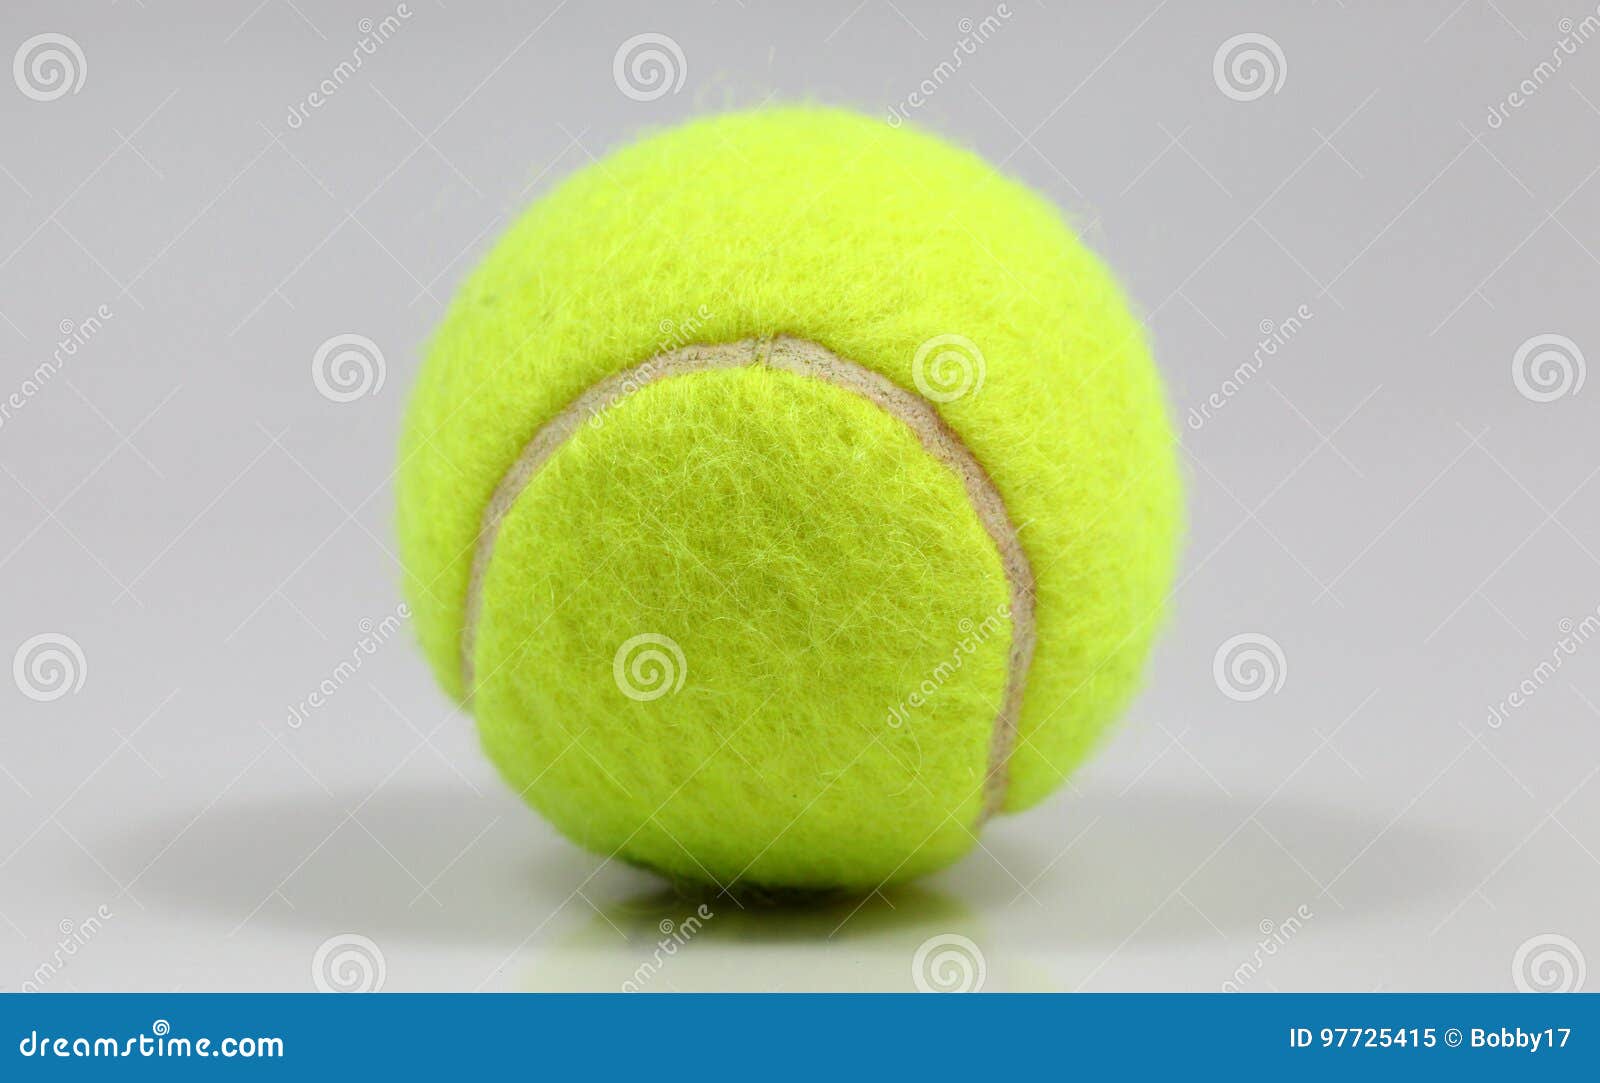 tennisball on white background